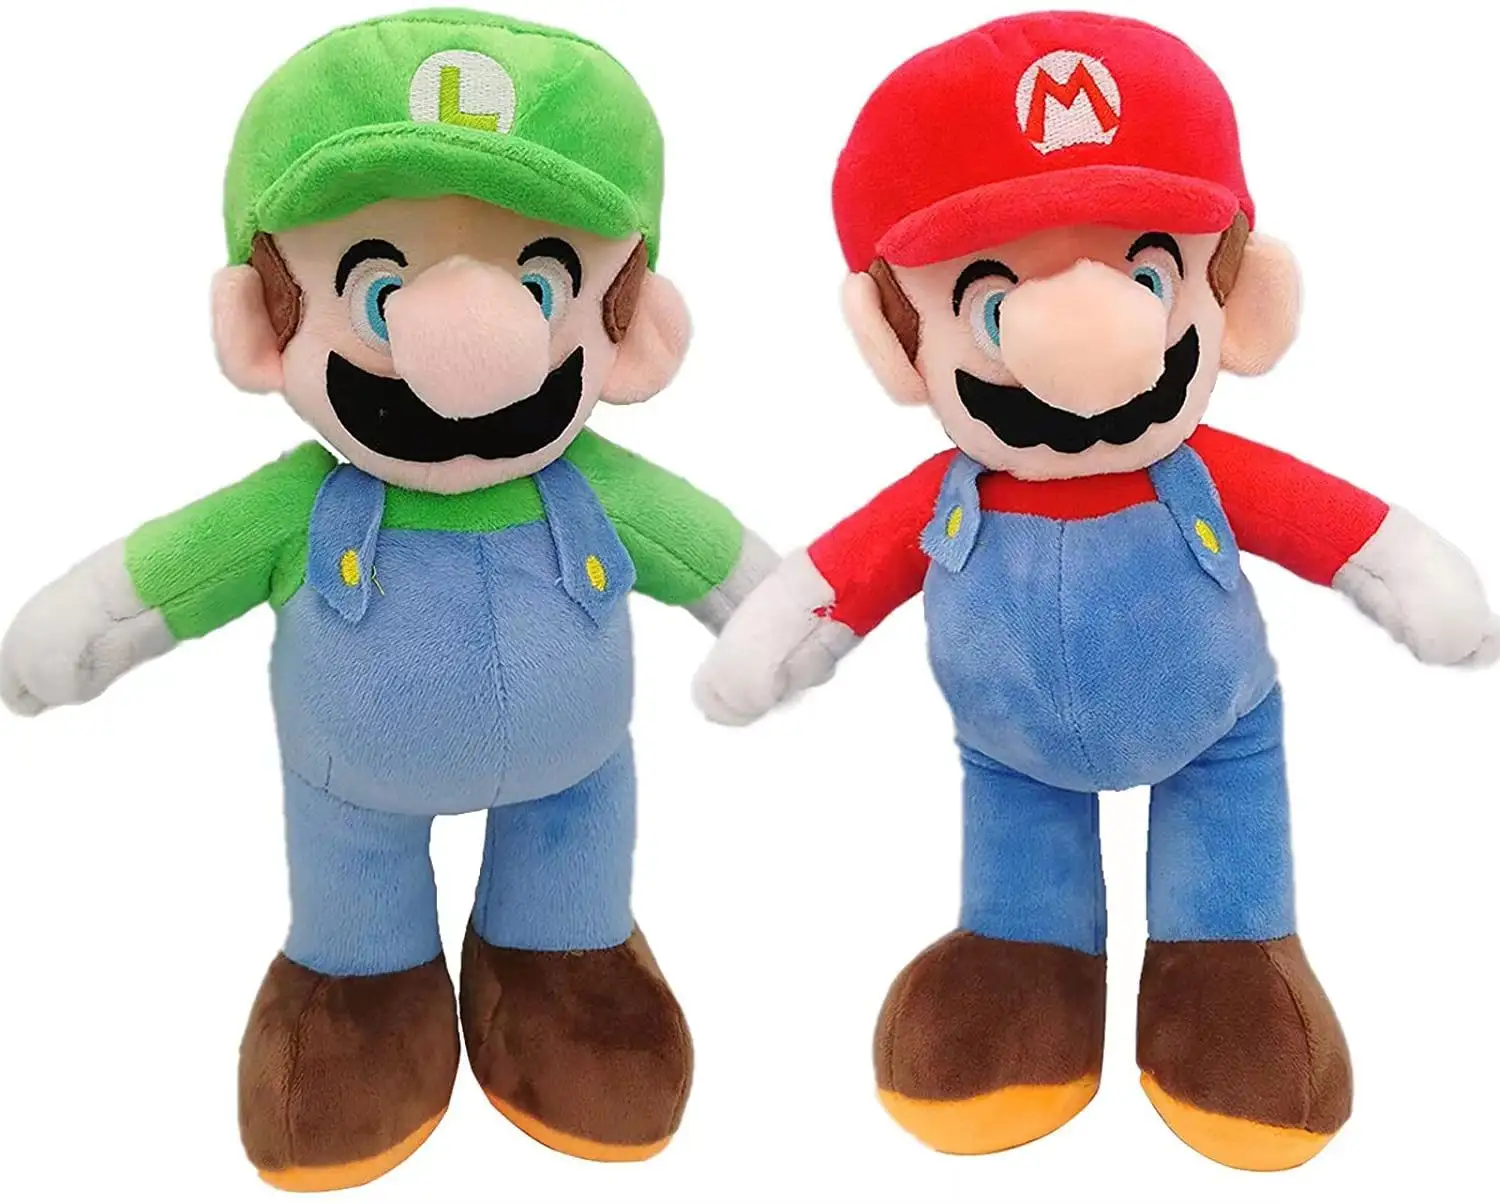 Amazon Hot Sale Super Bros Plush Toy 10inch Mario Luigi Plush soft Stuffed Doll Toy Kids Children Birthday Christmas Gift